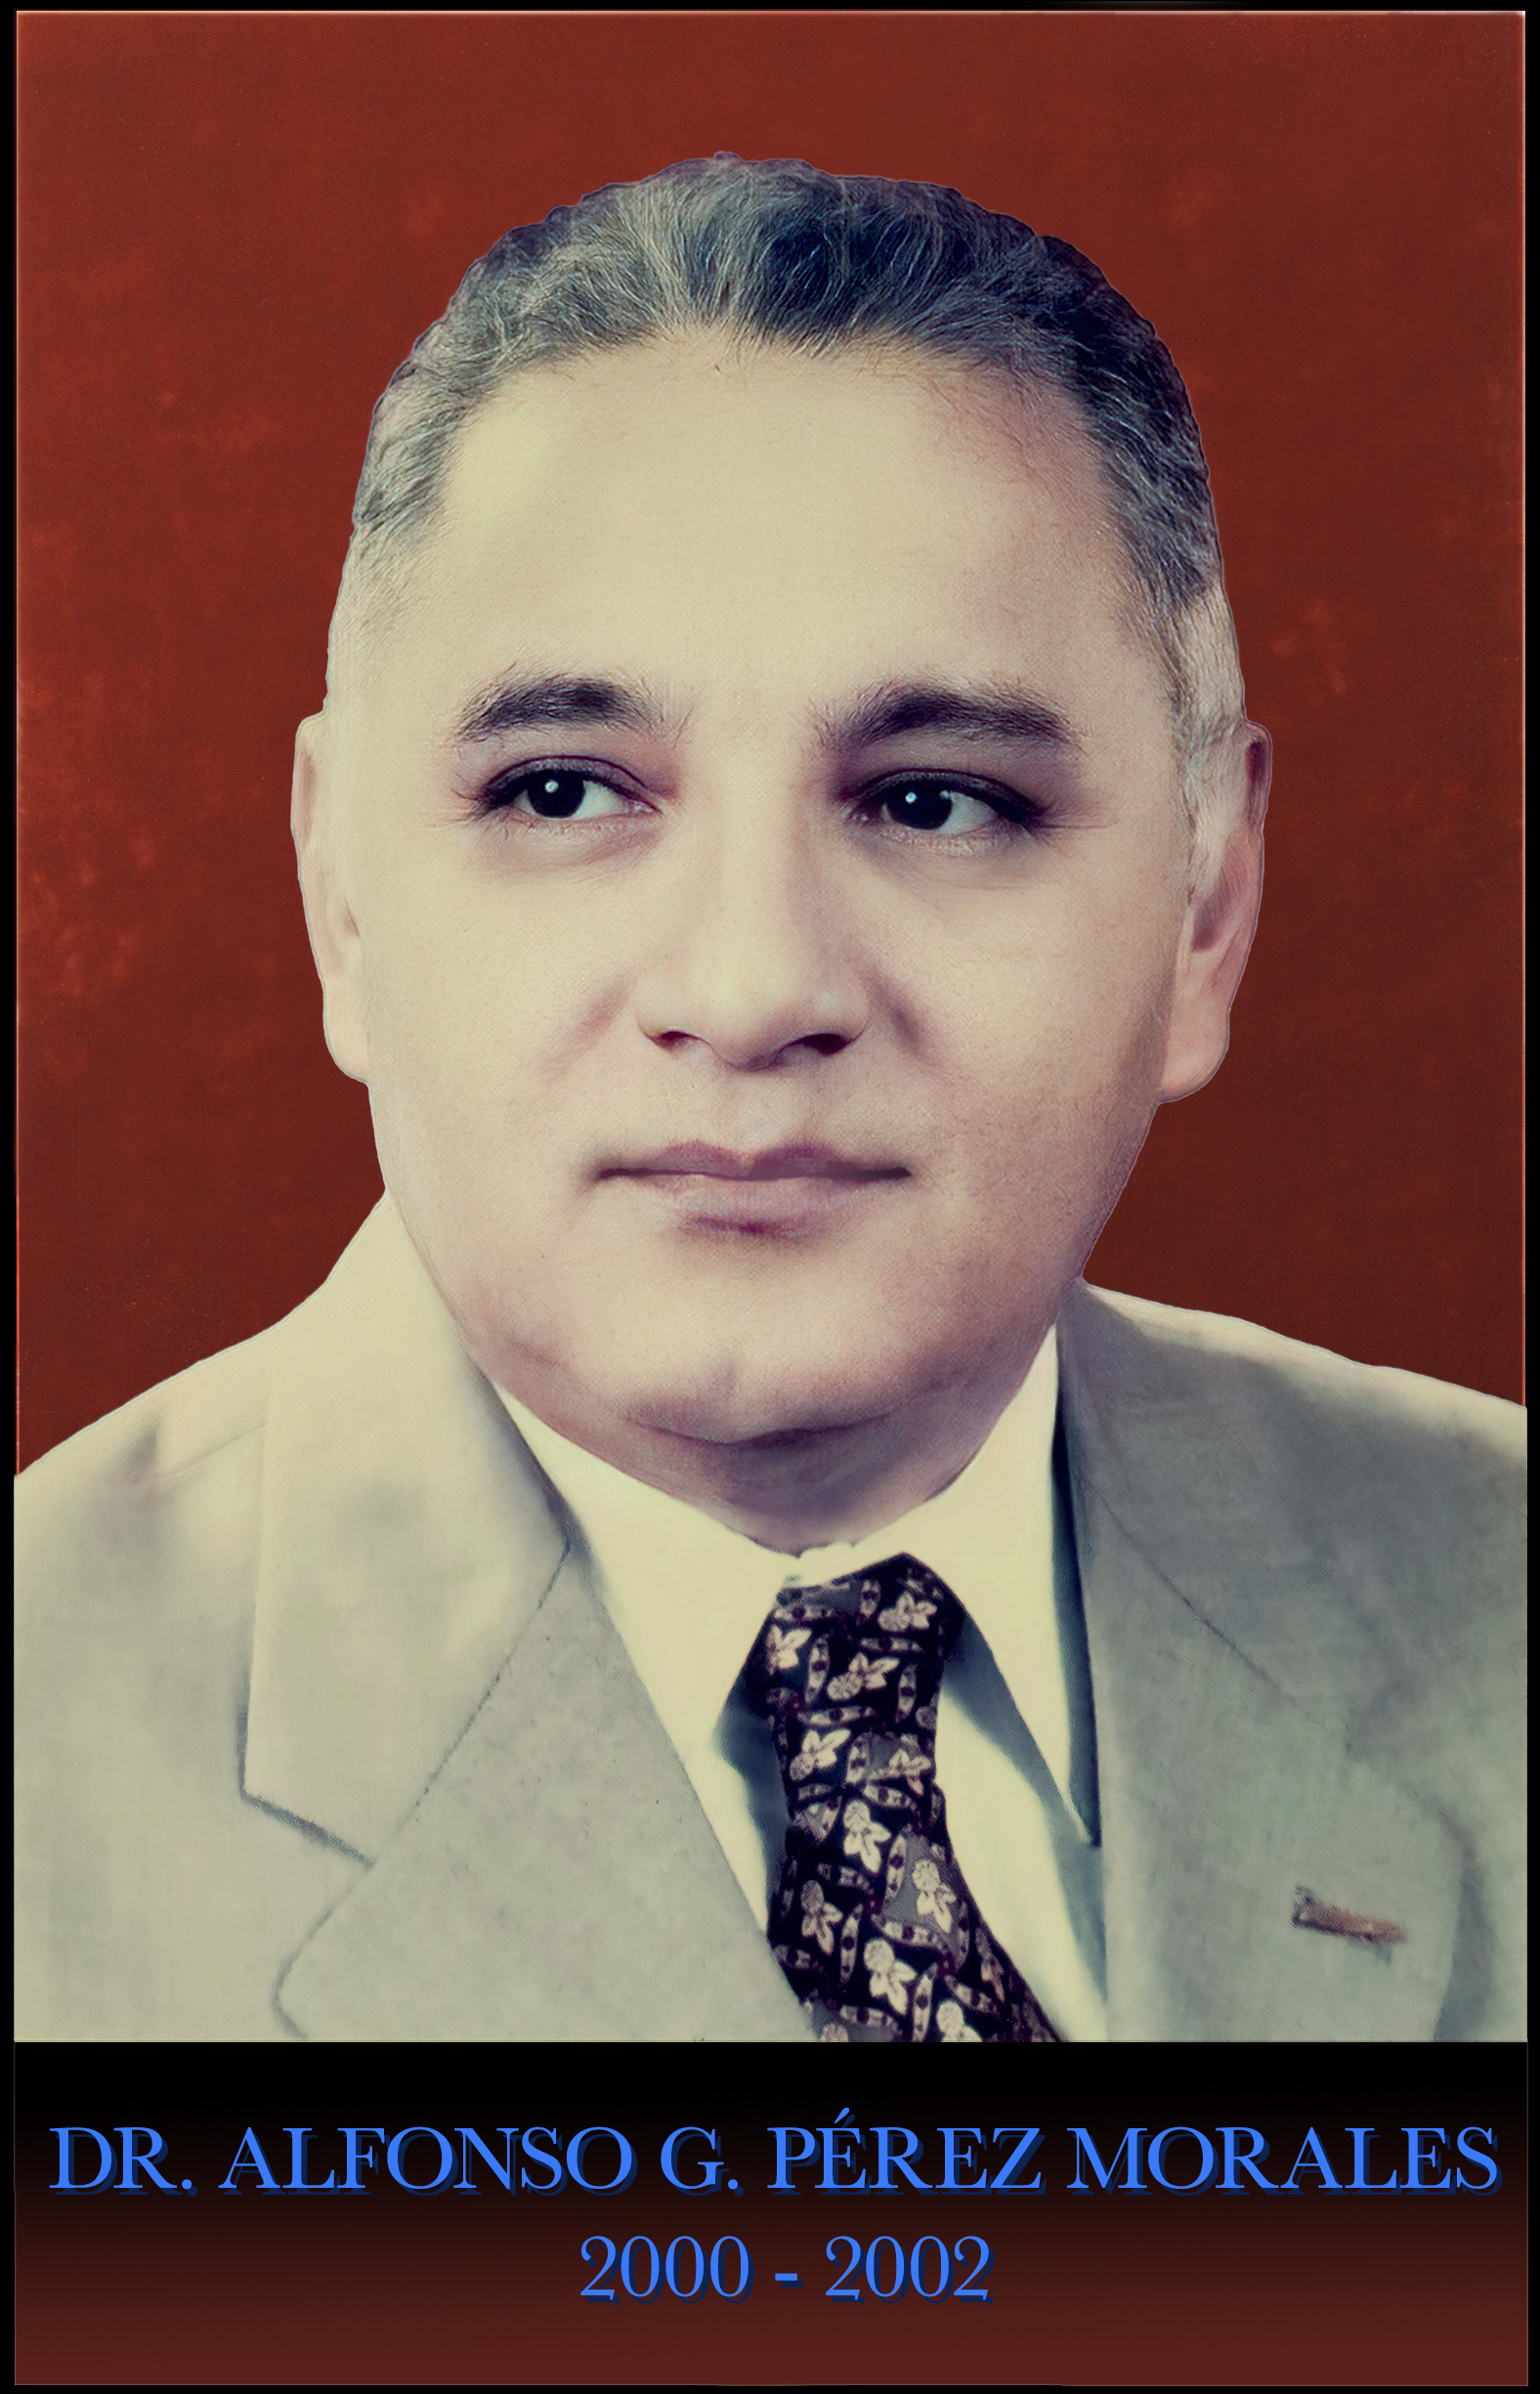 Dr. Alfonso Pérez Morales